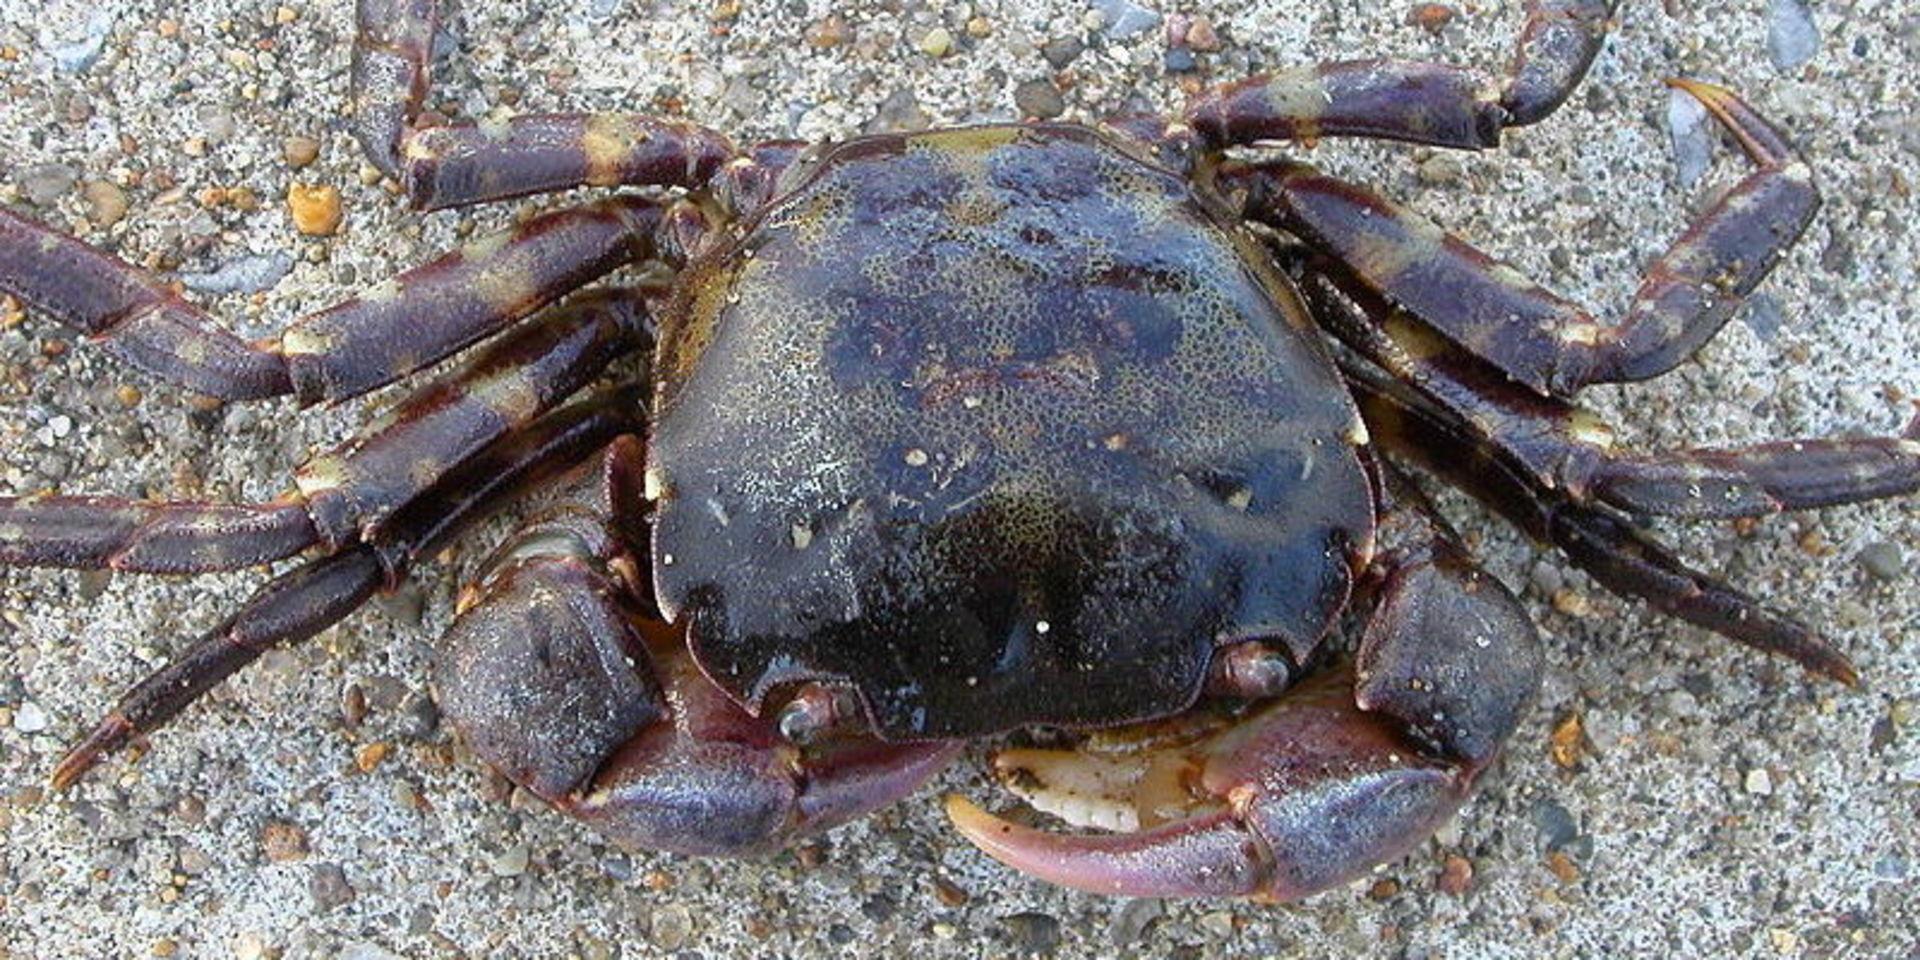 De senaste dagarna har 50 blåskrabbor hittats på Orust. Bild: <a href="https://commons.wikimedia.org/wiki/File:Hemigrapsus_sanguineus.jpg" id="link-666fb87157f0d04120d9e65ecf18d0b5">Self</a>